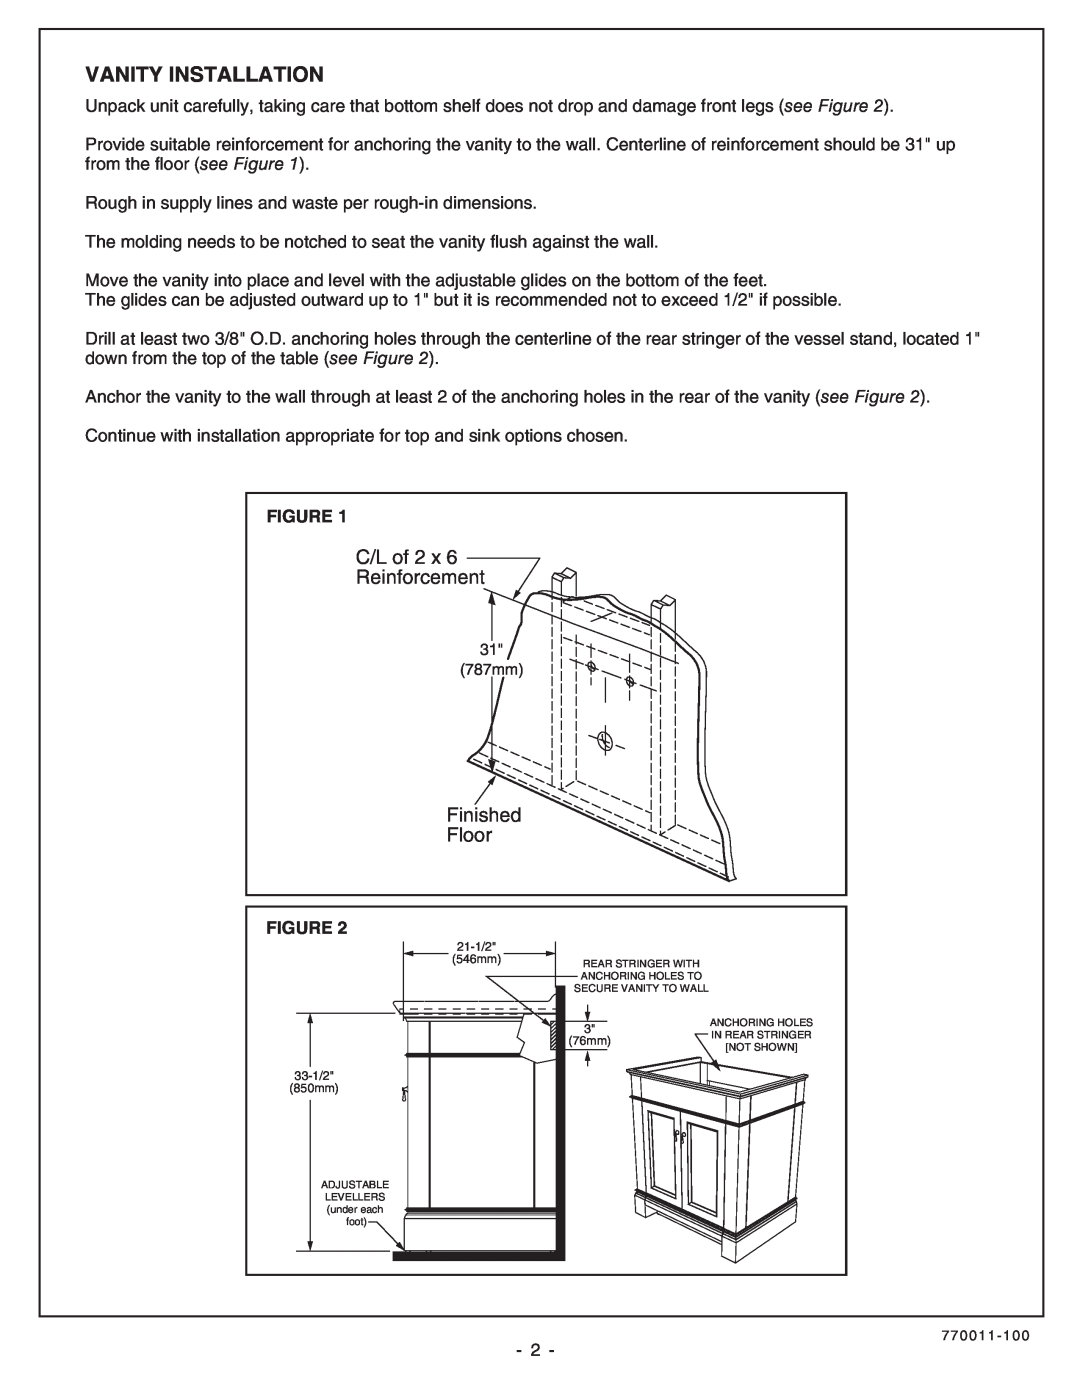 American Standard 9210.030.329 installation instructions Vanity Installation, C/L of, Reinforcement, Finished, Floor 